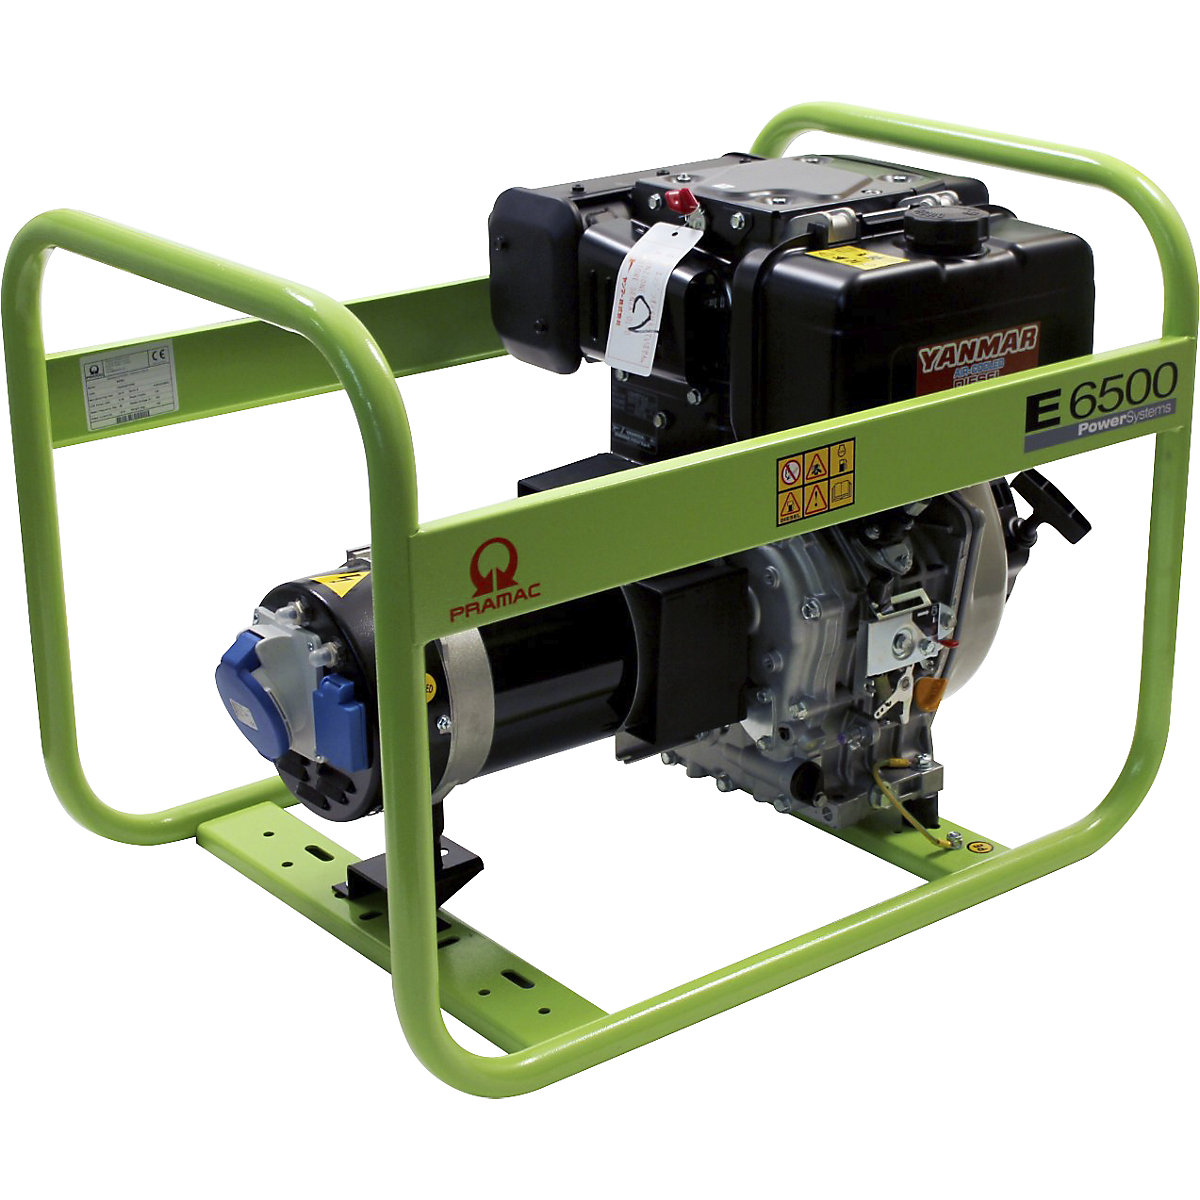 E series power generator – diesel, 230 V – Pramac